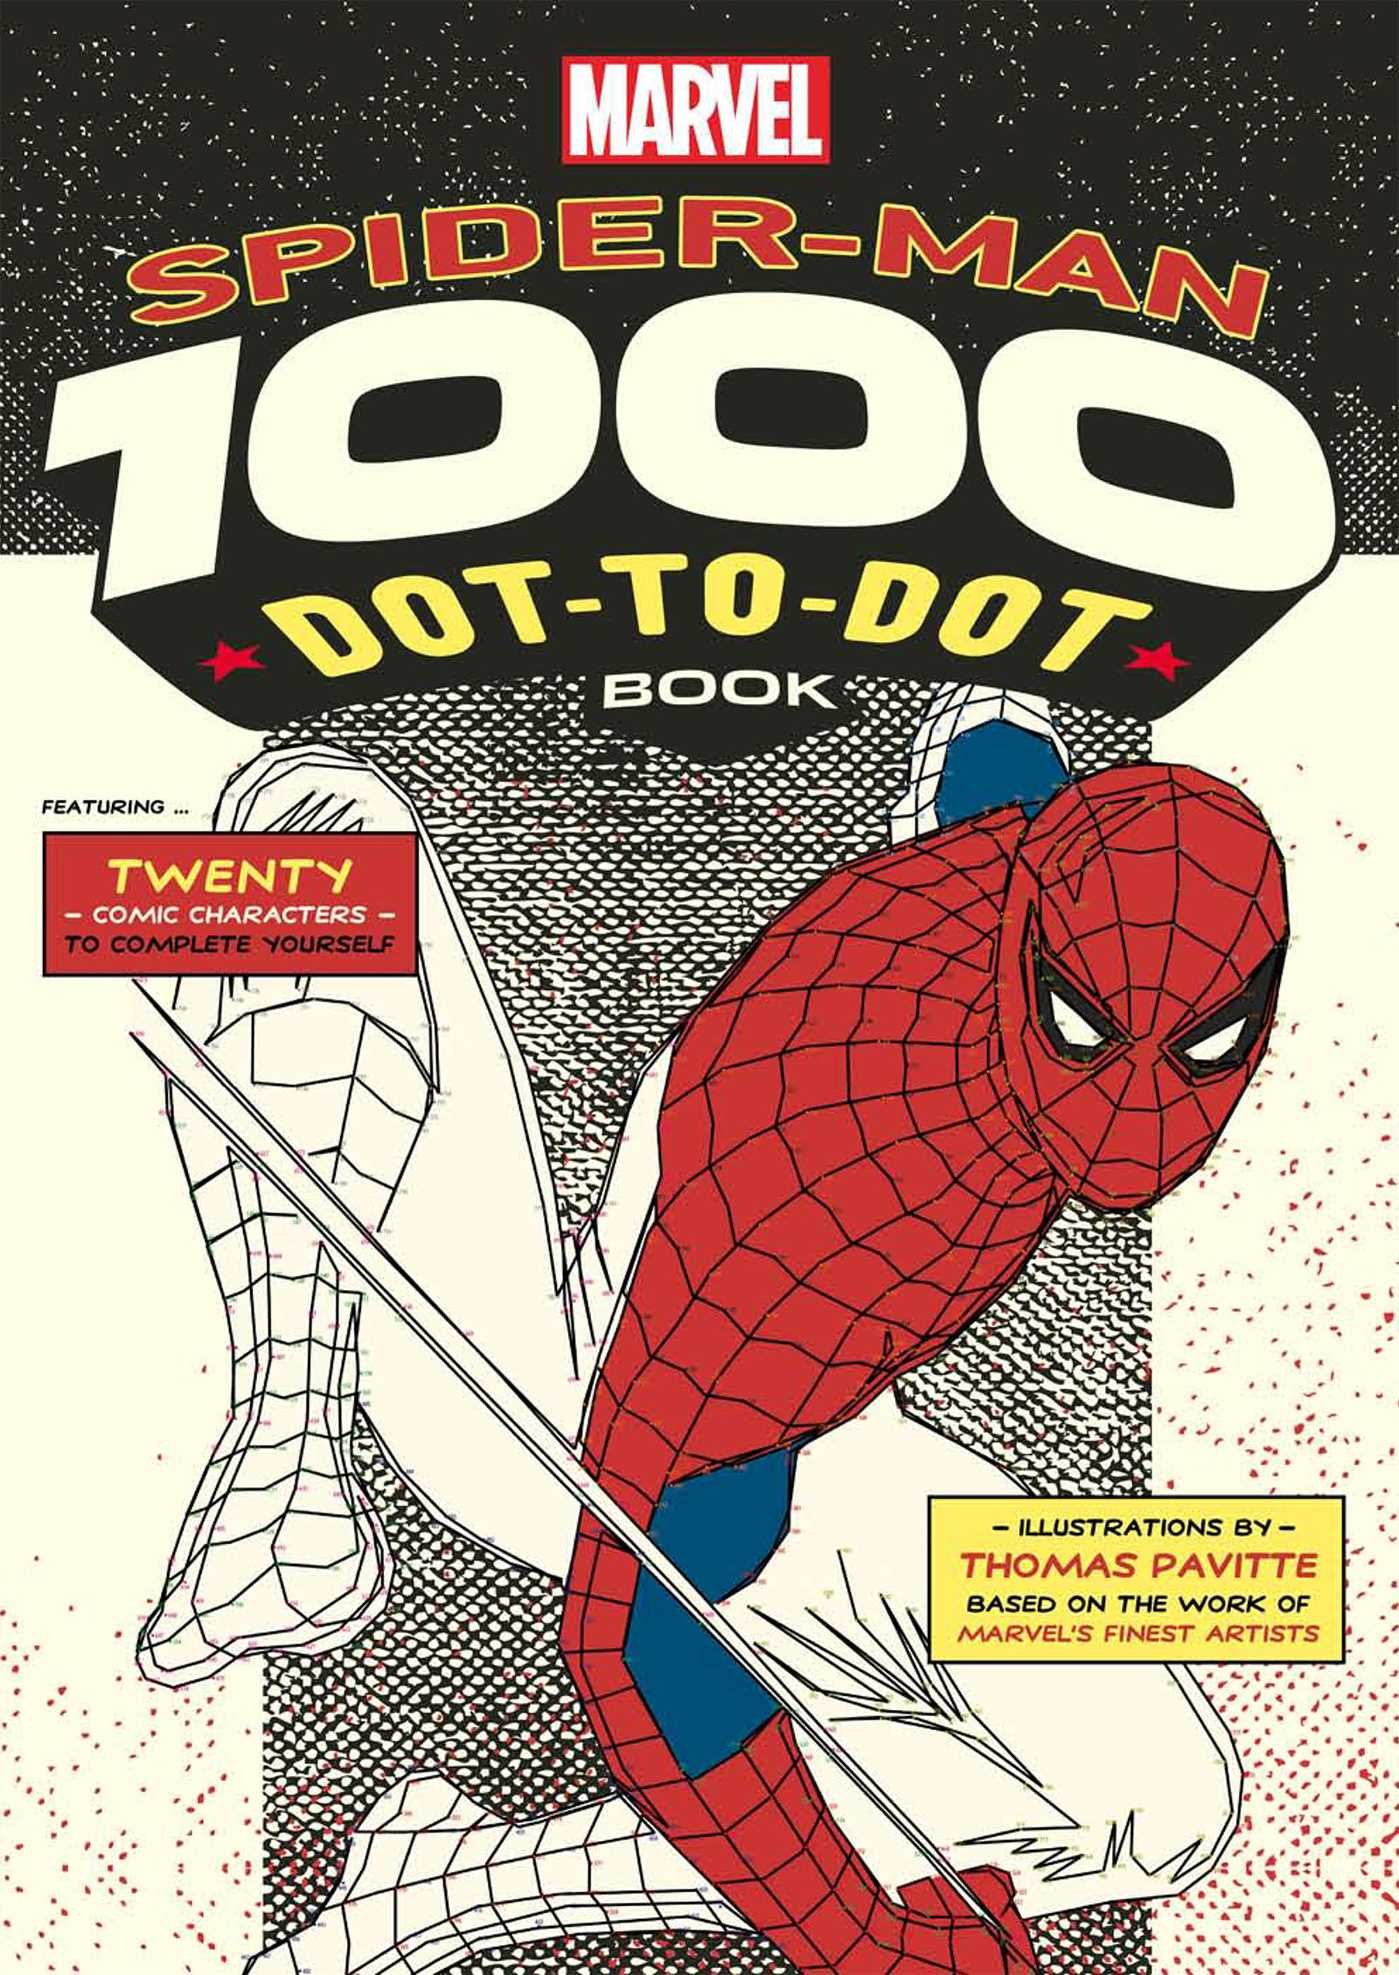 Marvel: Spider-man 1000 Dot-to-dot Book | Thomas Pavitte